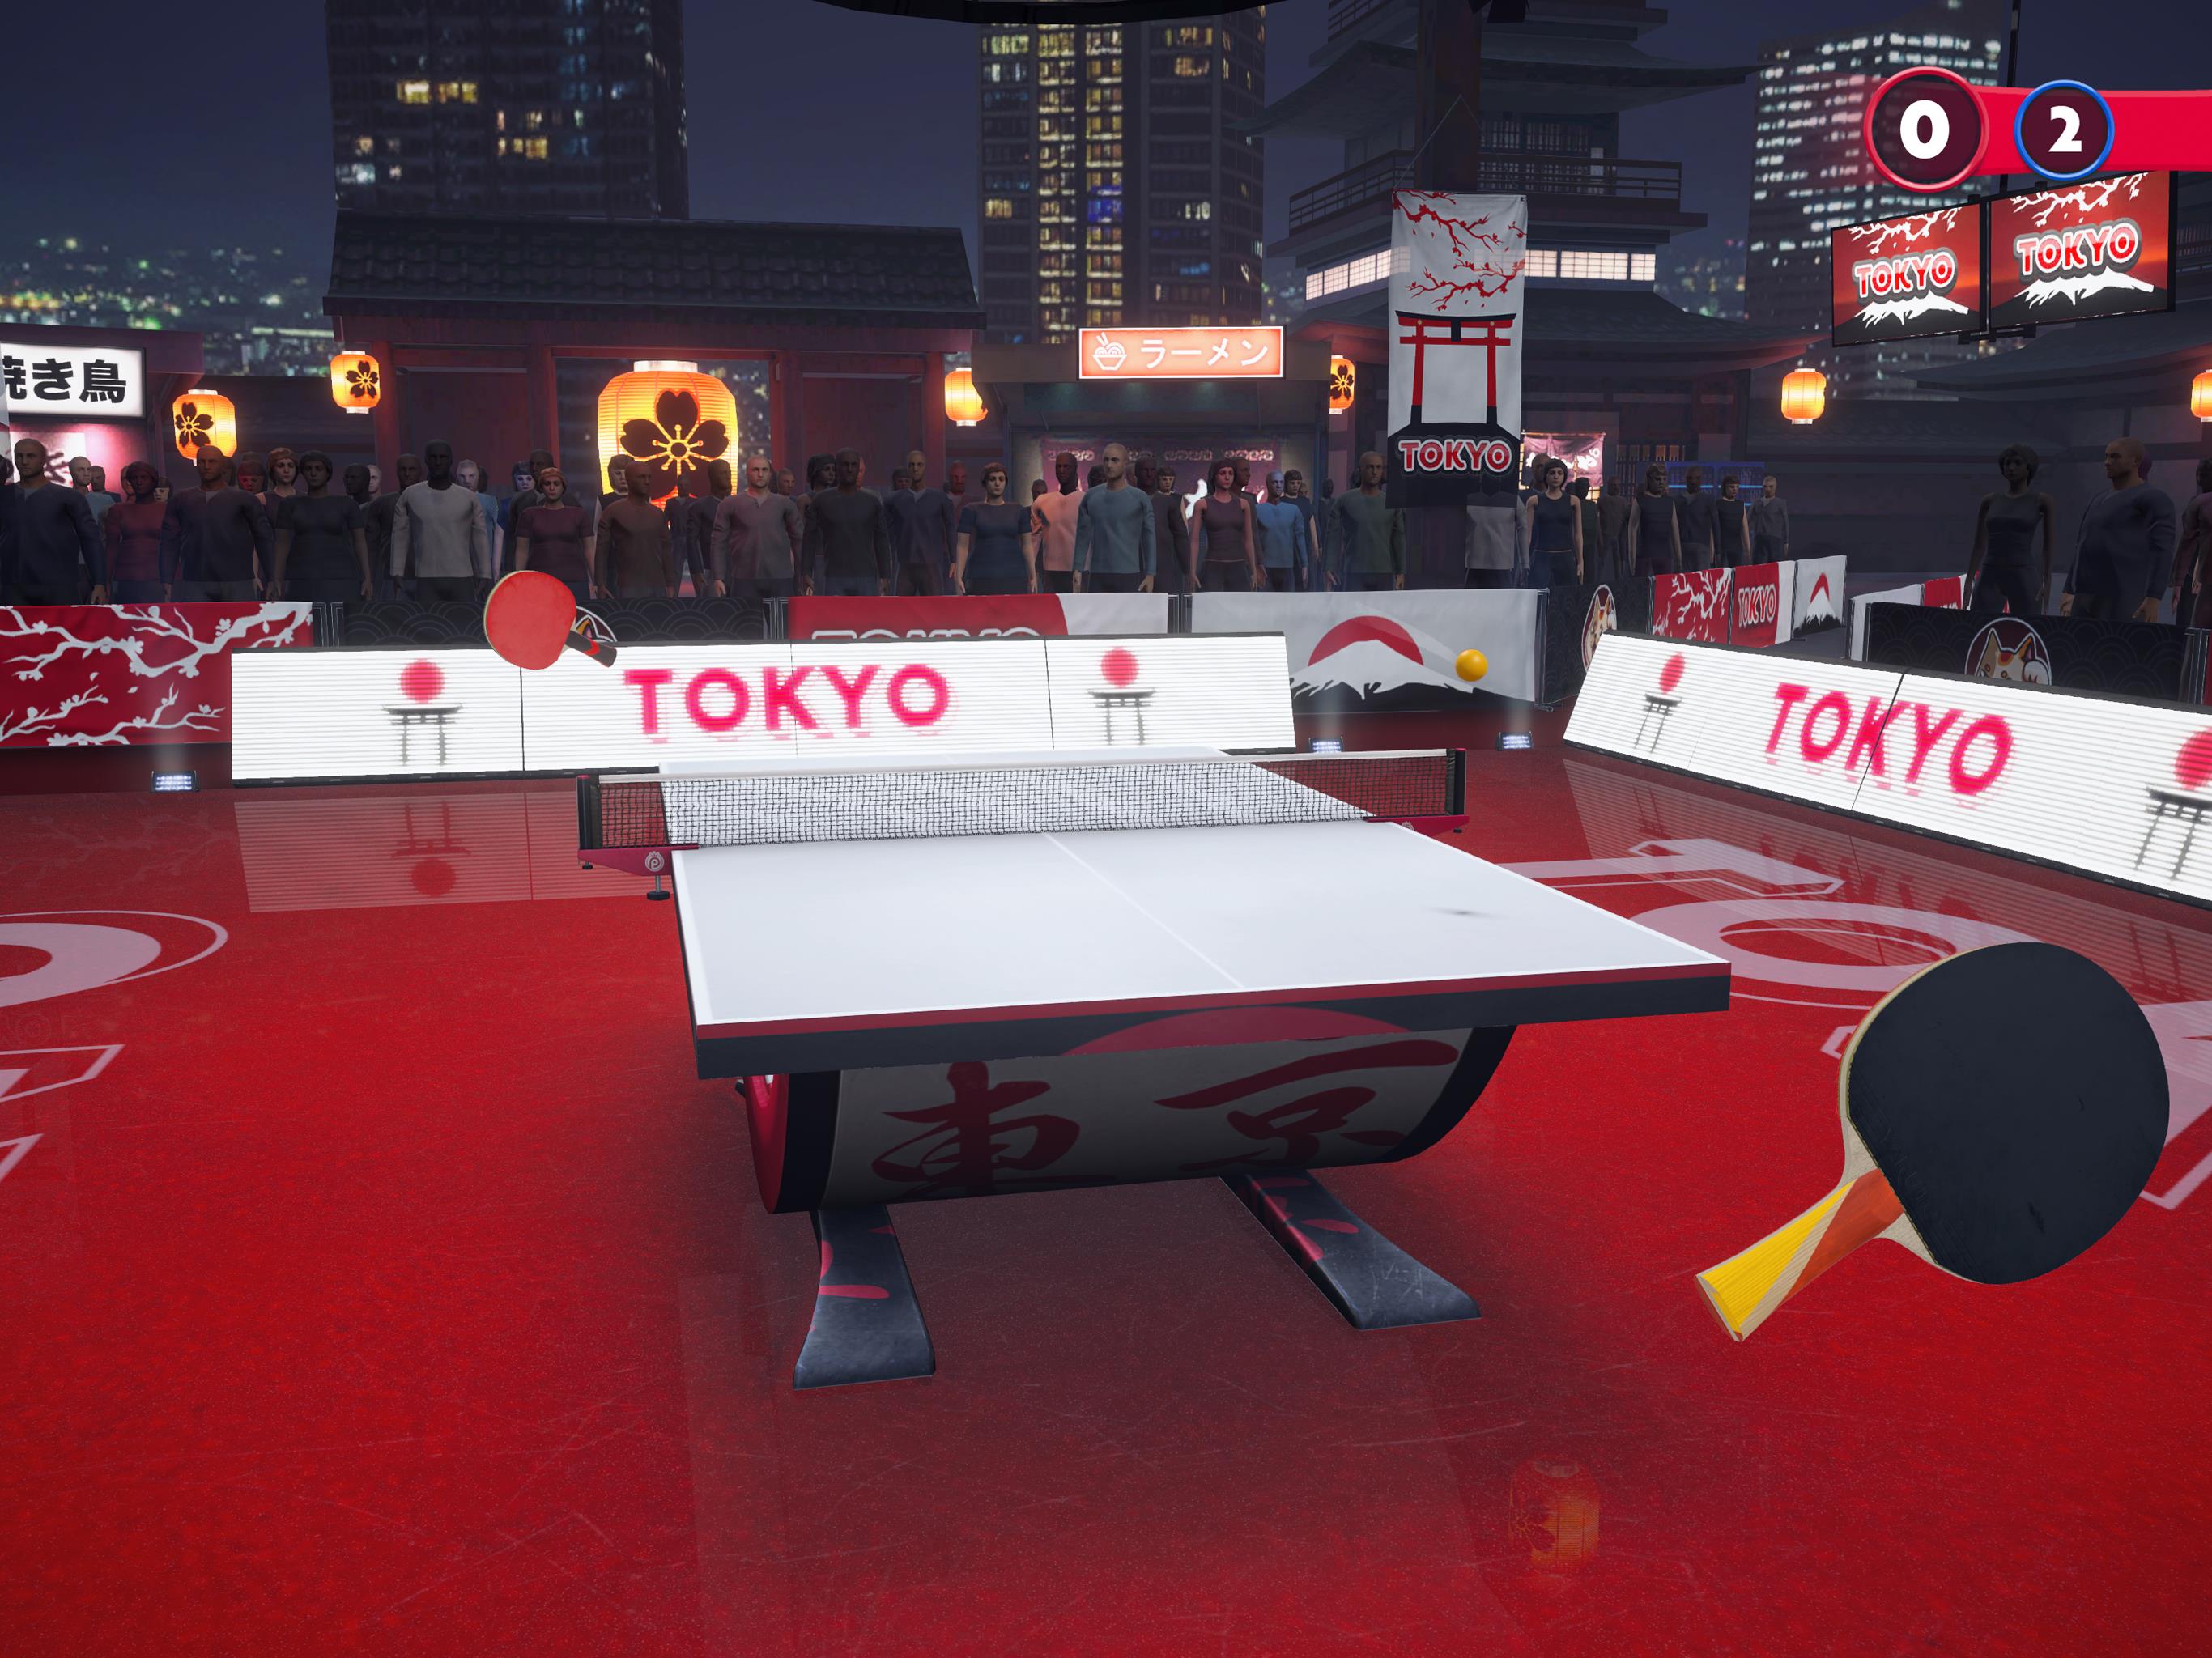 Ping Pong Fury screenshot 8